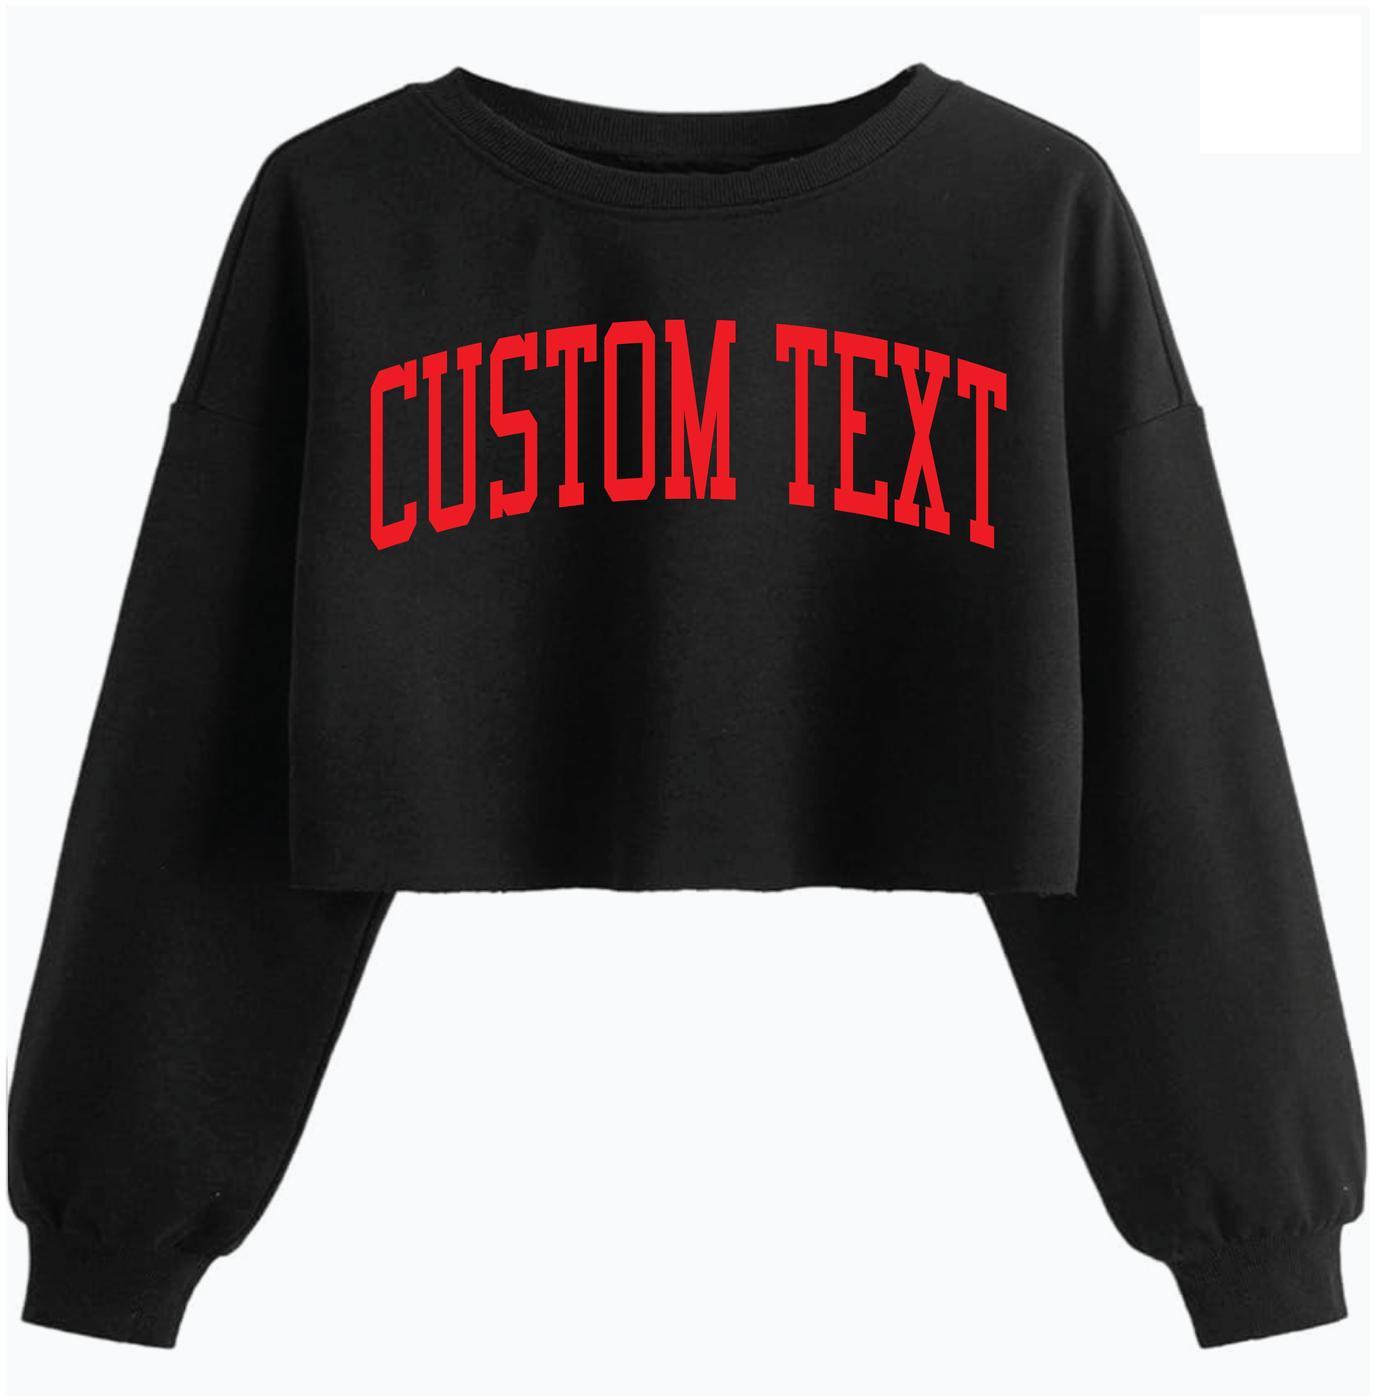 Customize Your Own Black Crop Sweatshirt